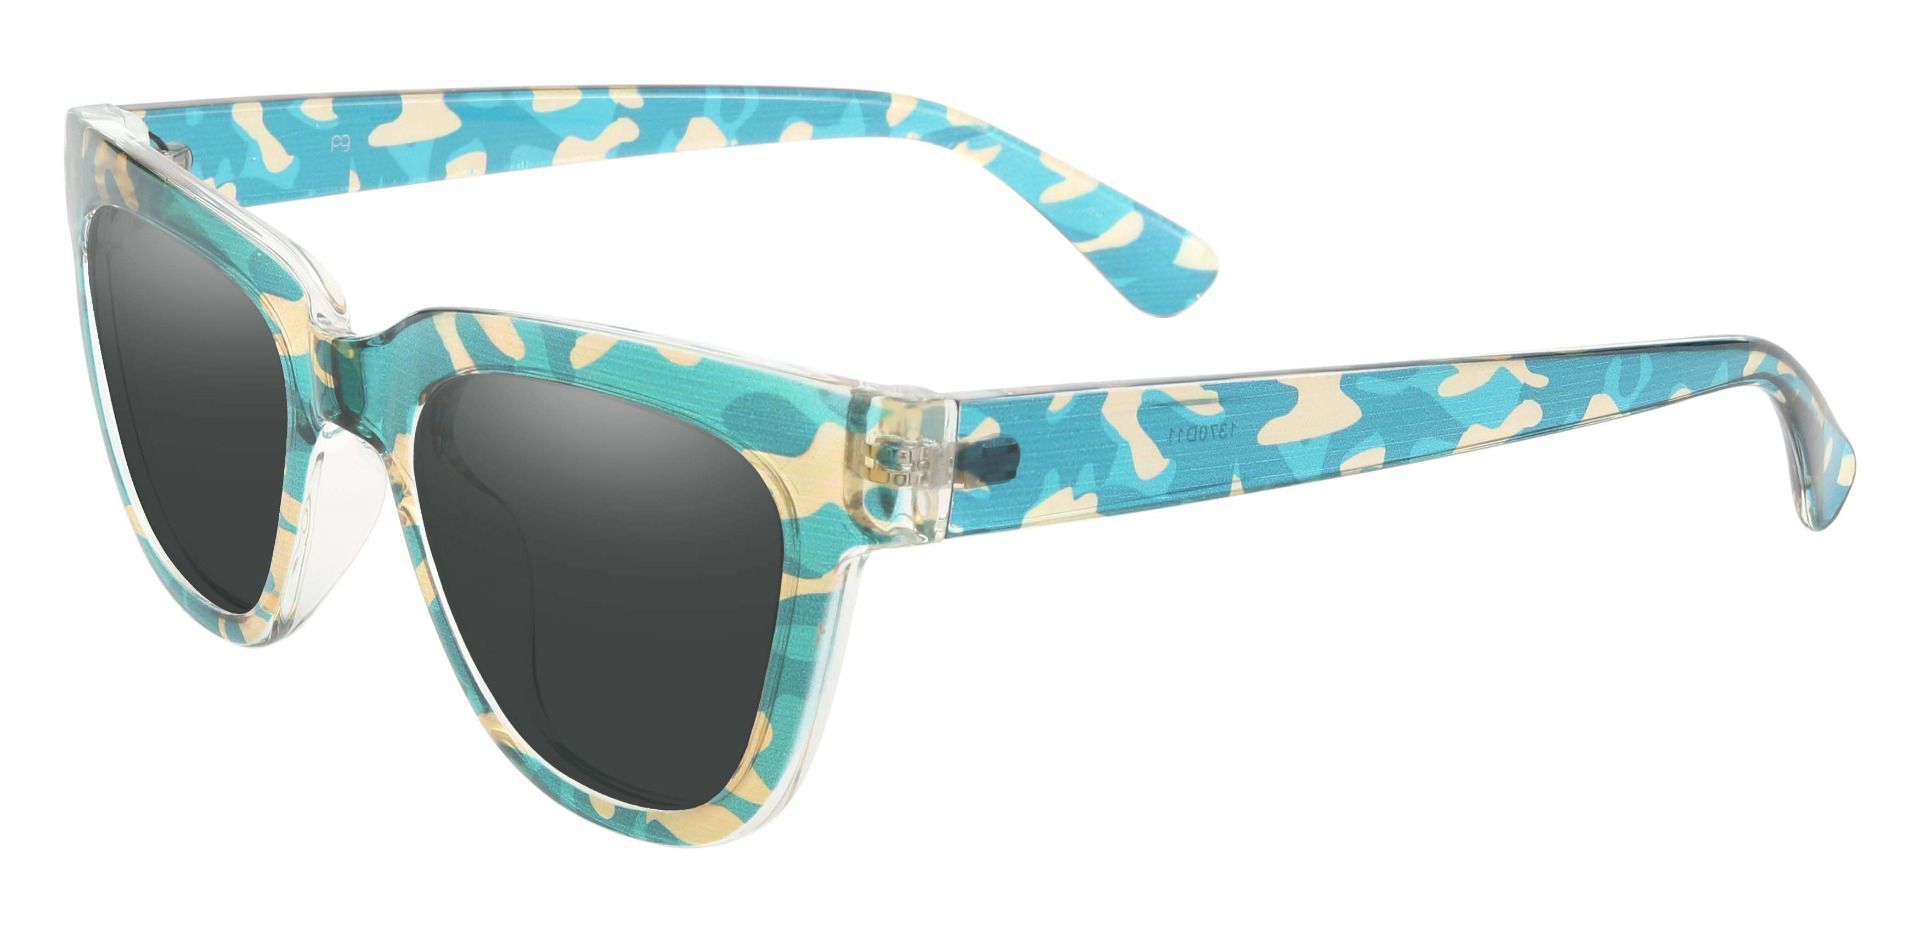 Myrtle Square Prescription Sunglasses - Green Frame With Gray Lenses